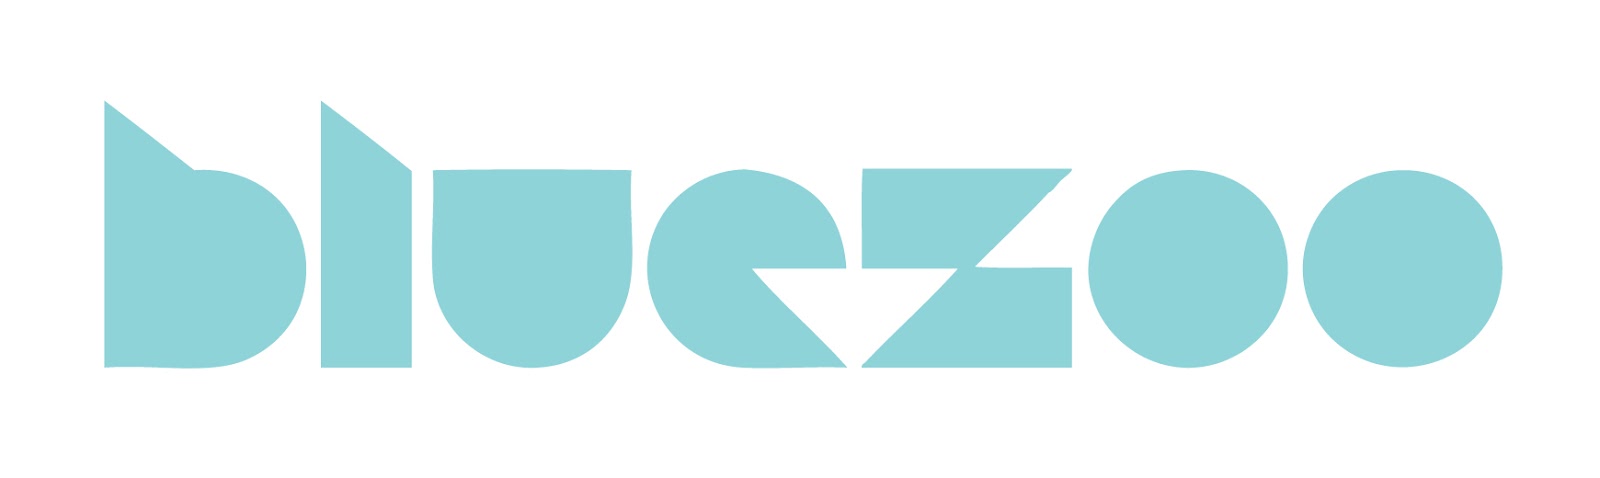 bluezoo logo with shapes